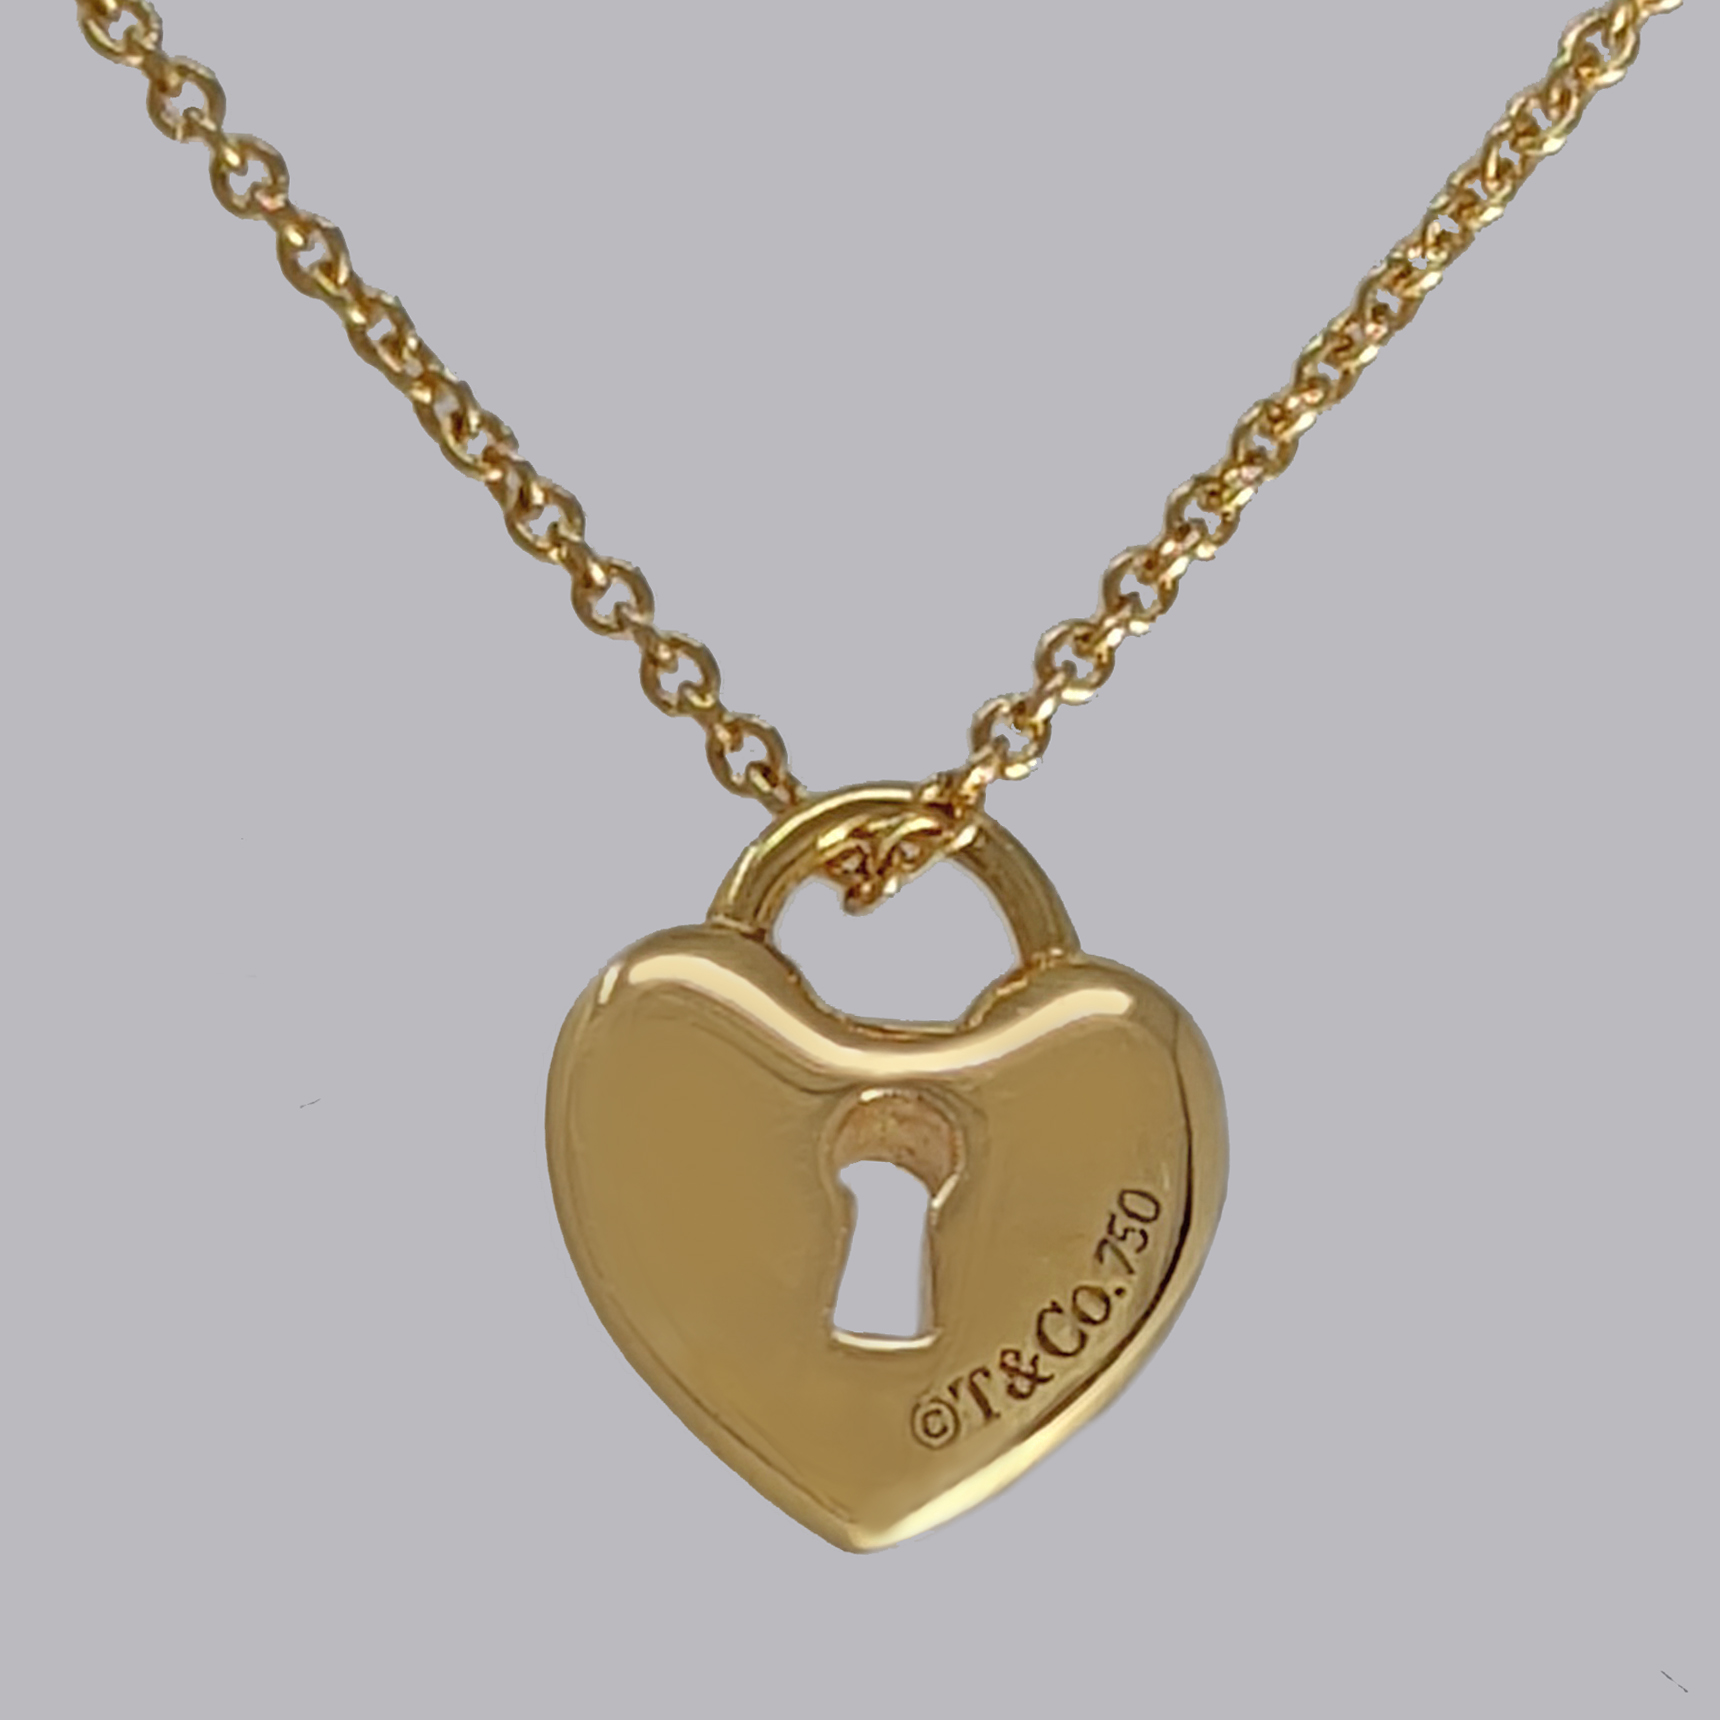 Tiffany & Co Heart Lock Charm in Yellow Gold